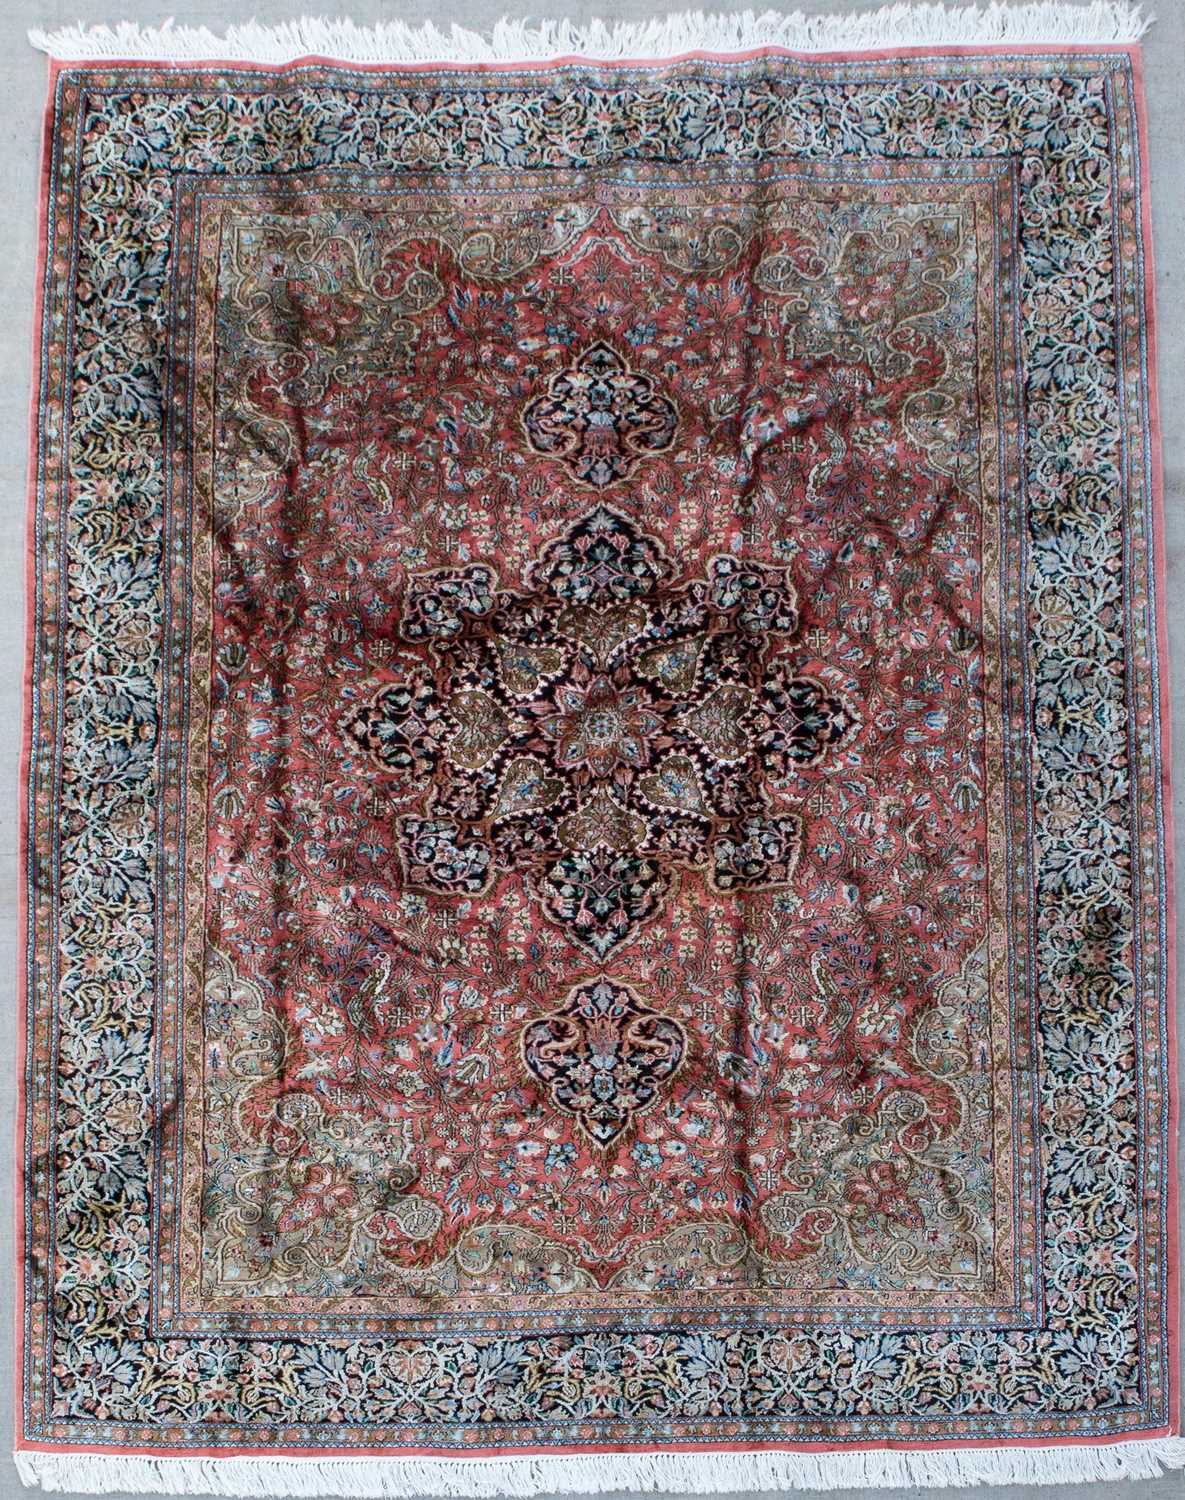 A 20th century Indian Kashmir silk rug with a detailed foliate decoration, 210cm x 208cmIn good